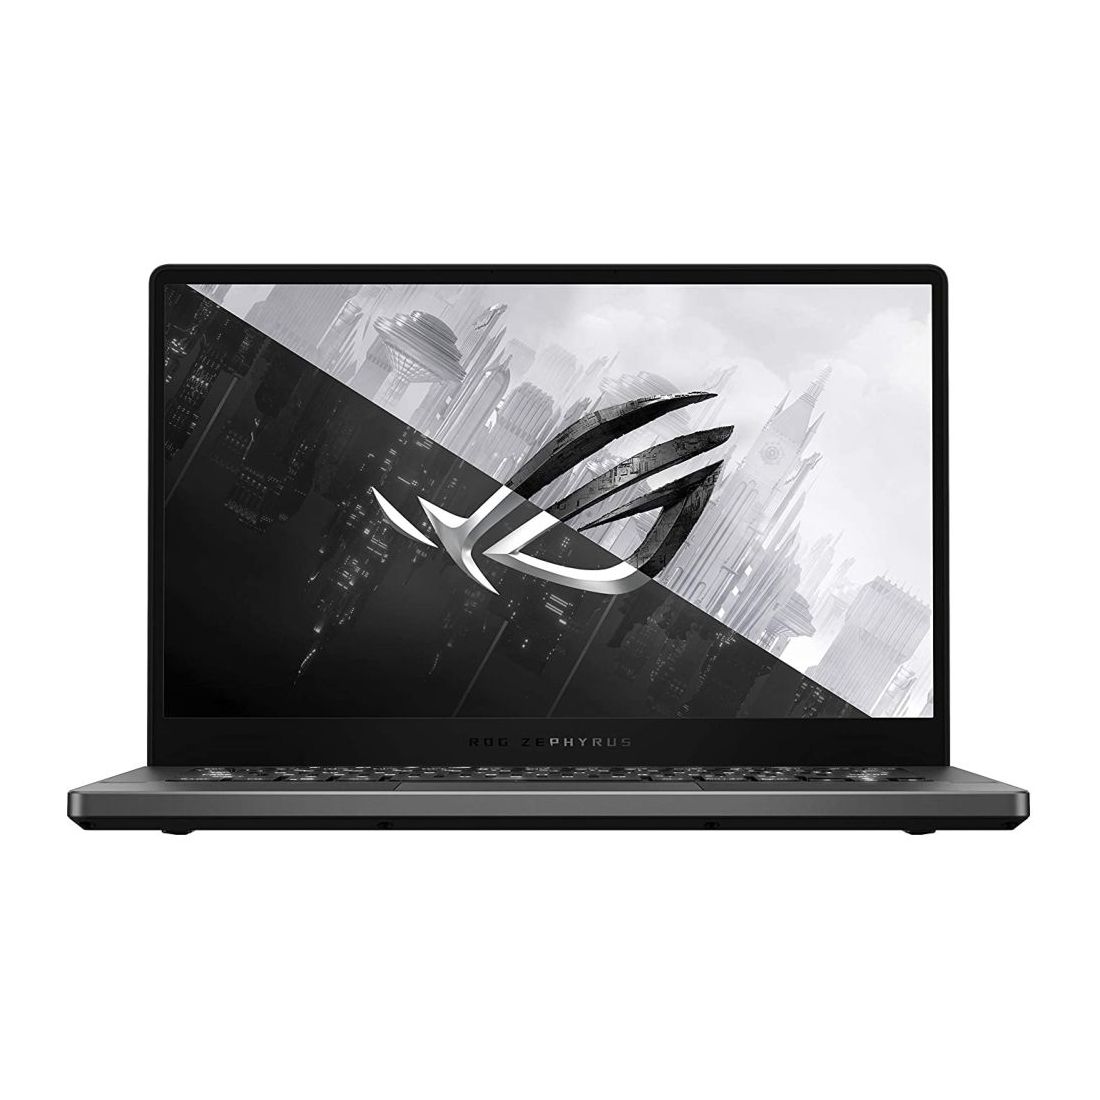 ASUS ROG Zephyrus G14 R9-4900HS Gaming Laptop 16GB/1TB SSD/NVIDIA GeForce RTX 2060 6GB/14 QHD/60Hz/Windows 10/Grey